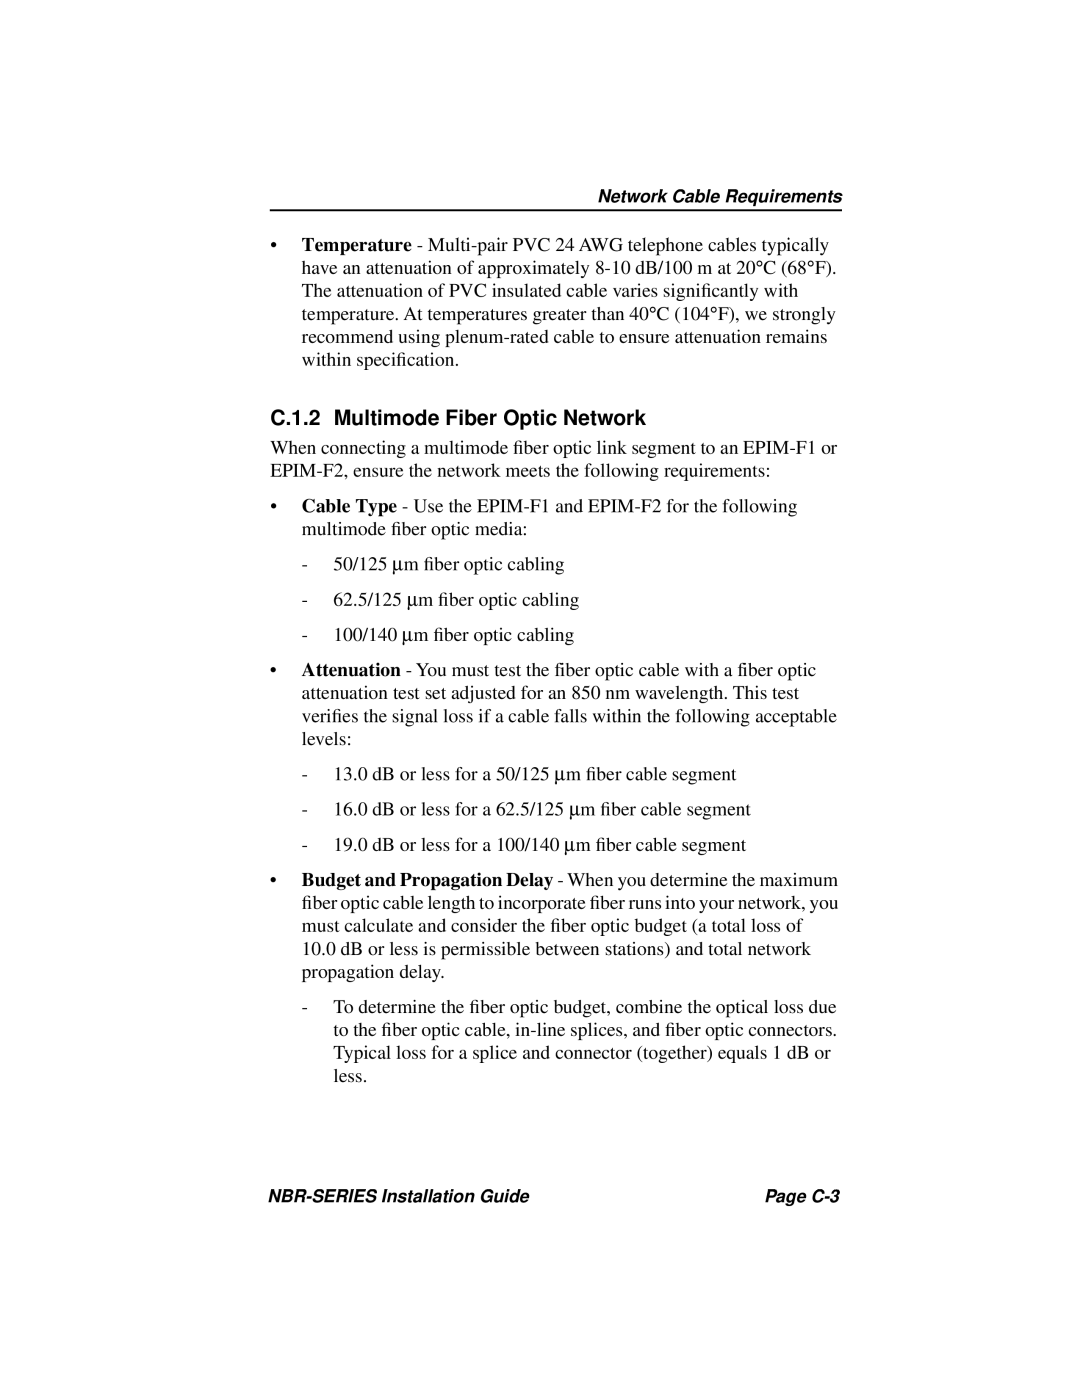 Cabletron Systems NBR-620, NBR-420, NBR-220 manual C.1.2 Multimode Fiber Optic Network 